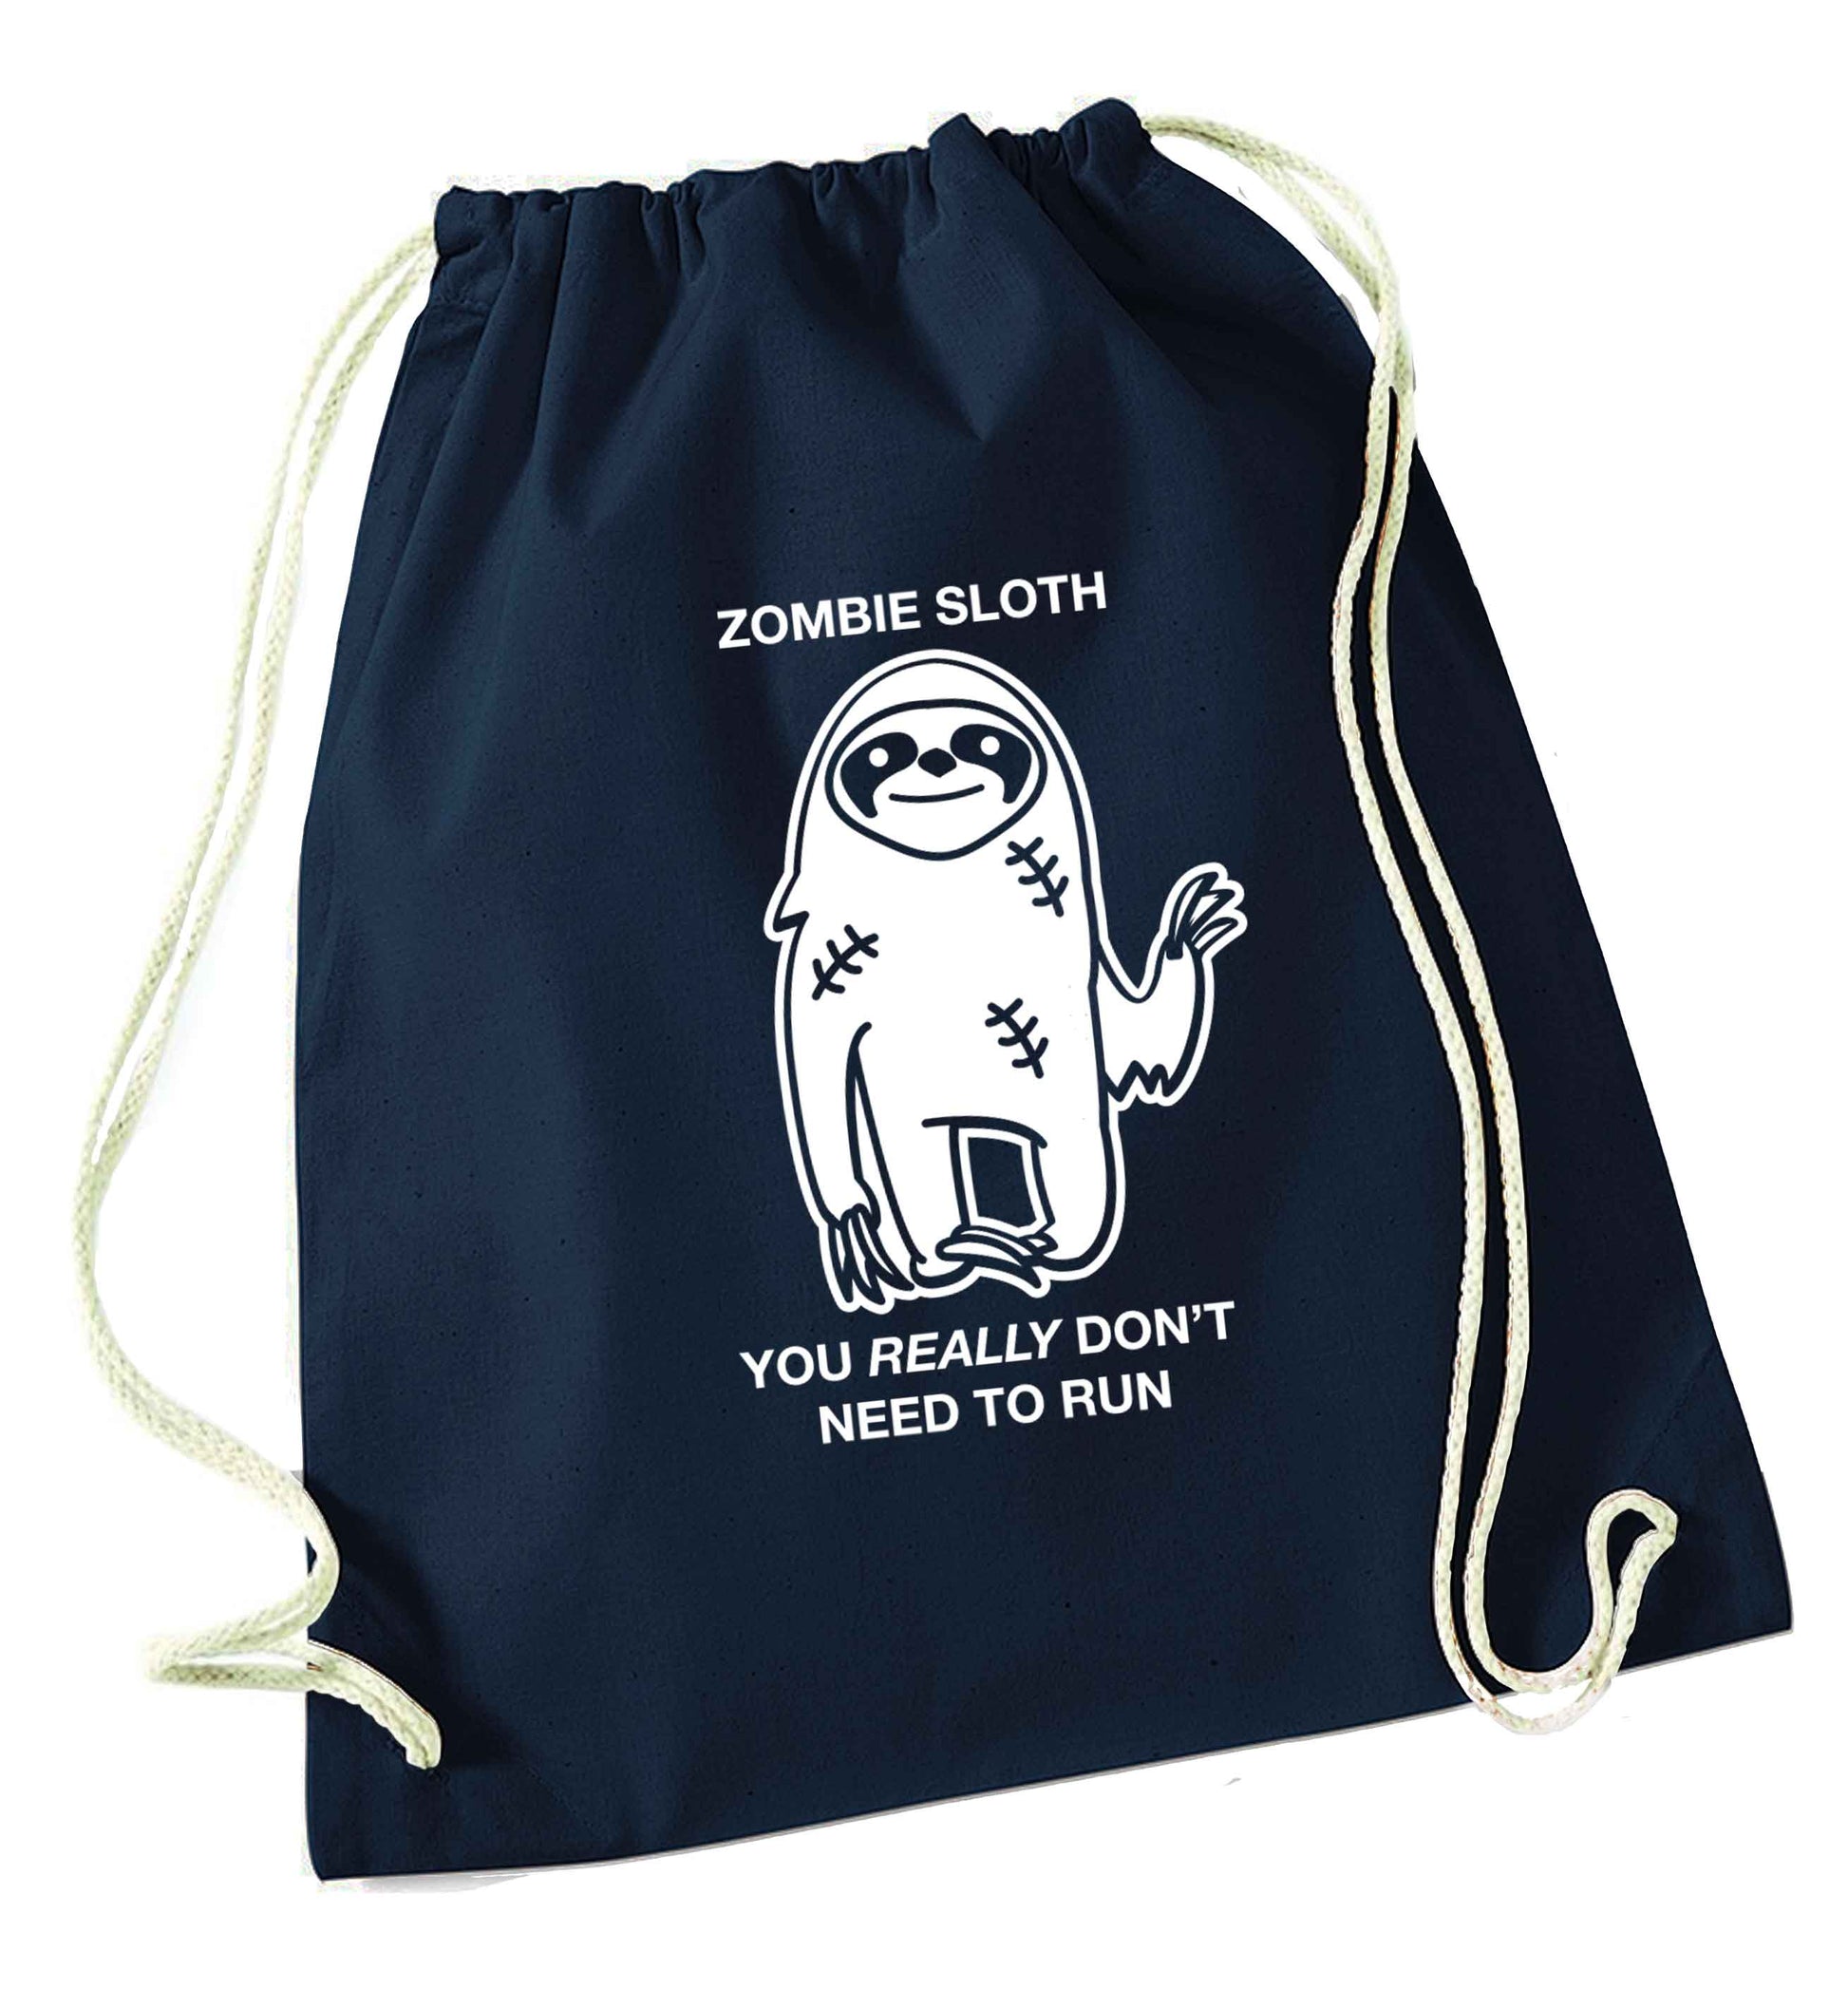 Zombie sloth you really don't need to run navy drawstring bag